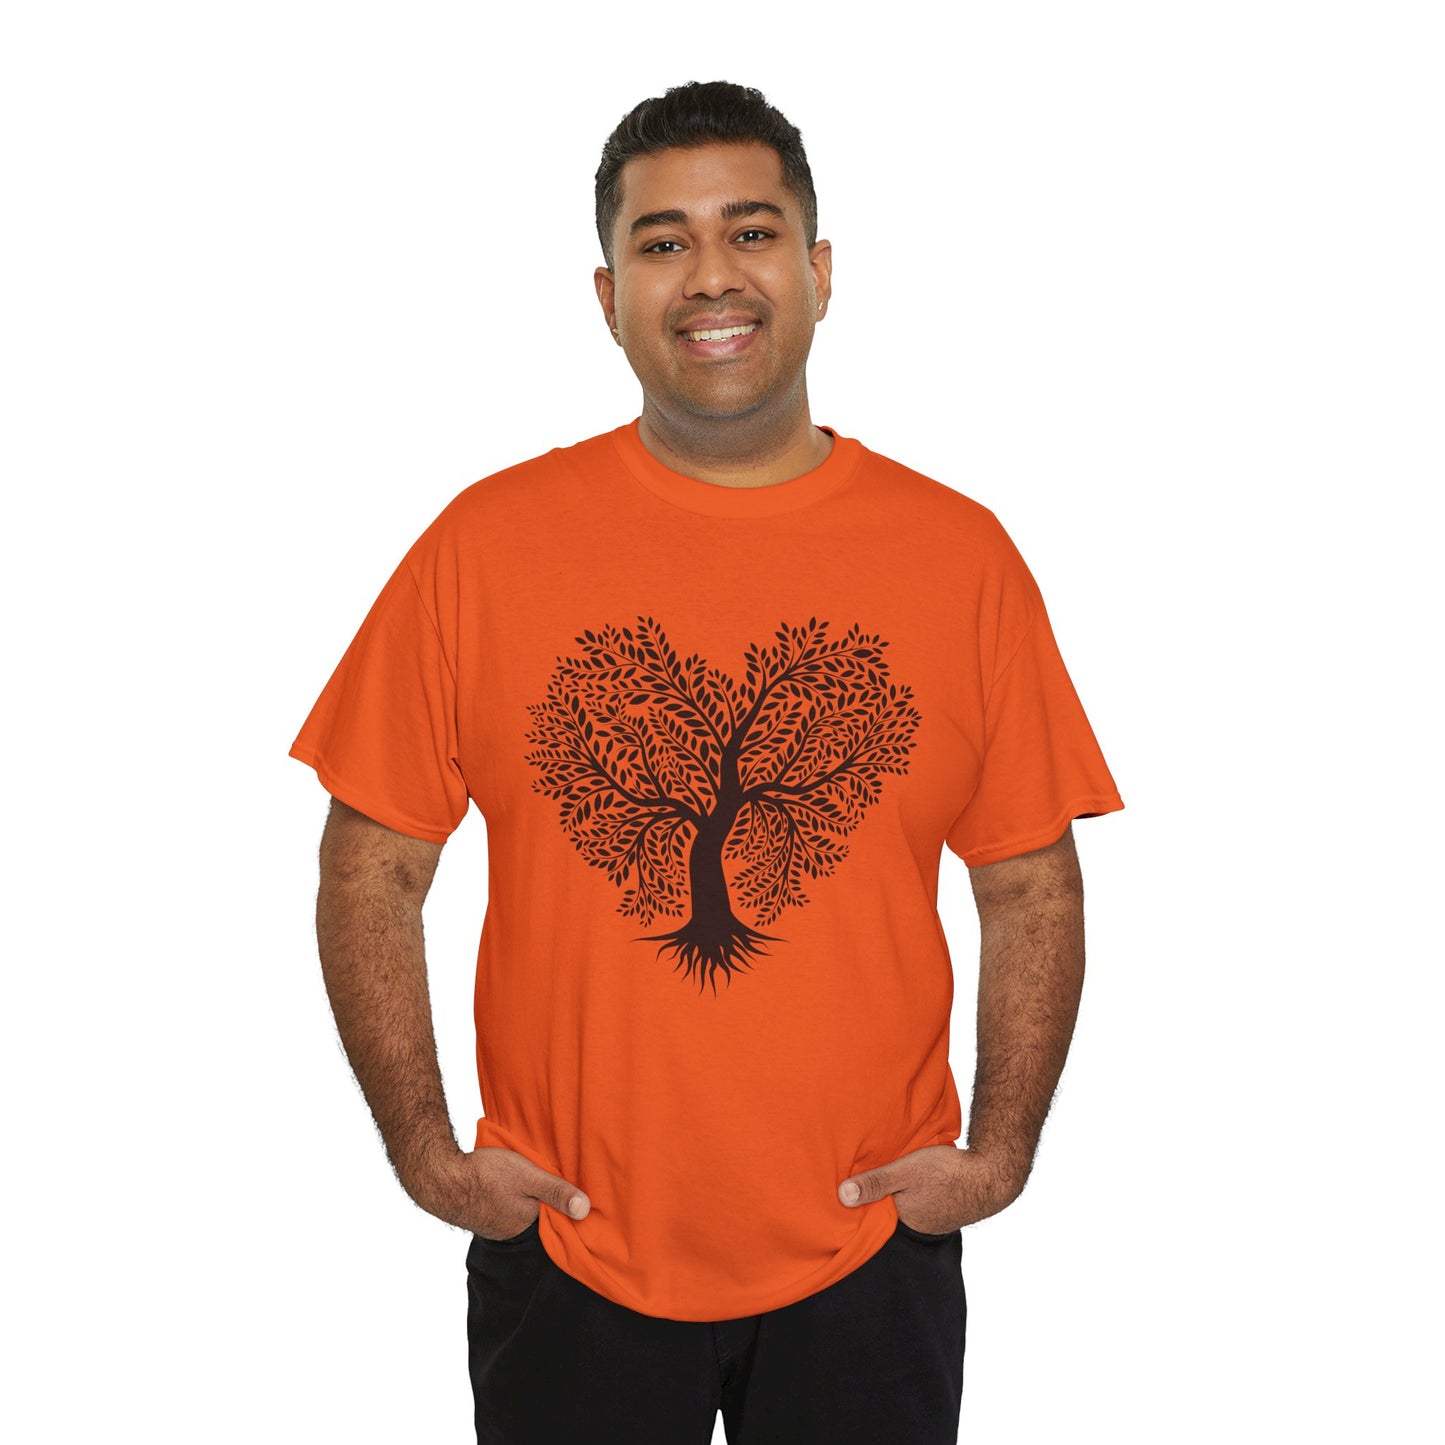 Tree of Life Heart Cotton t-shirt